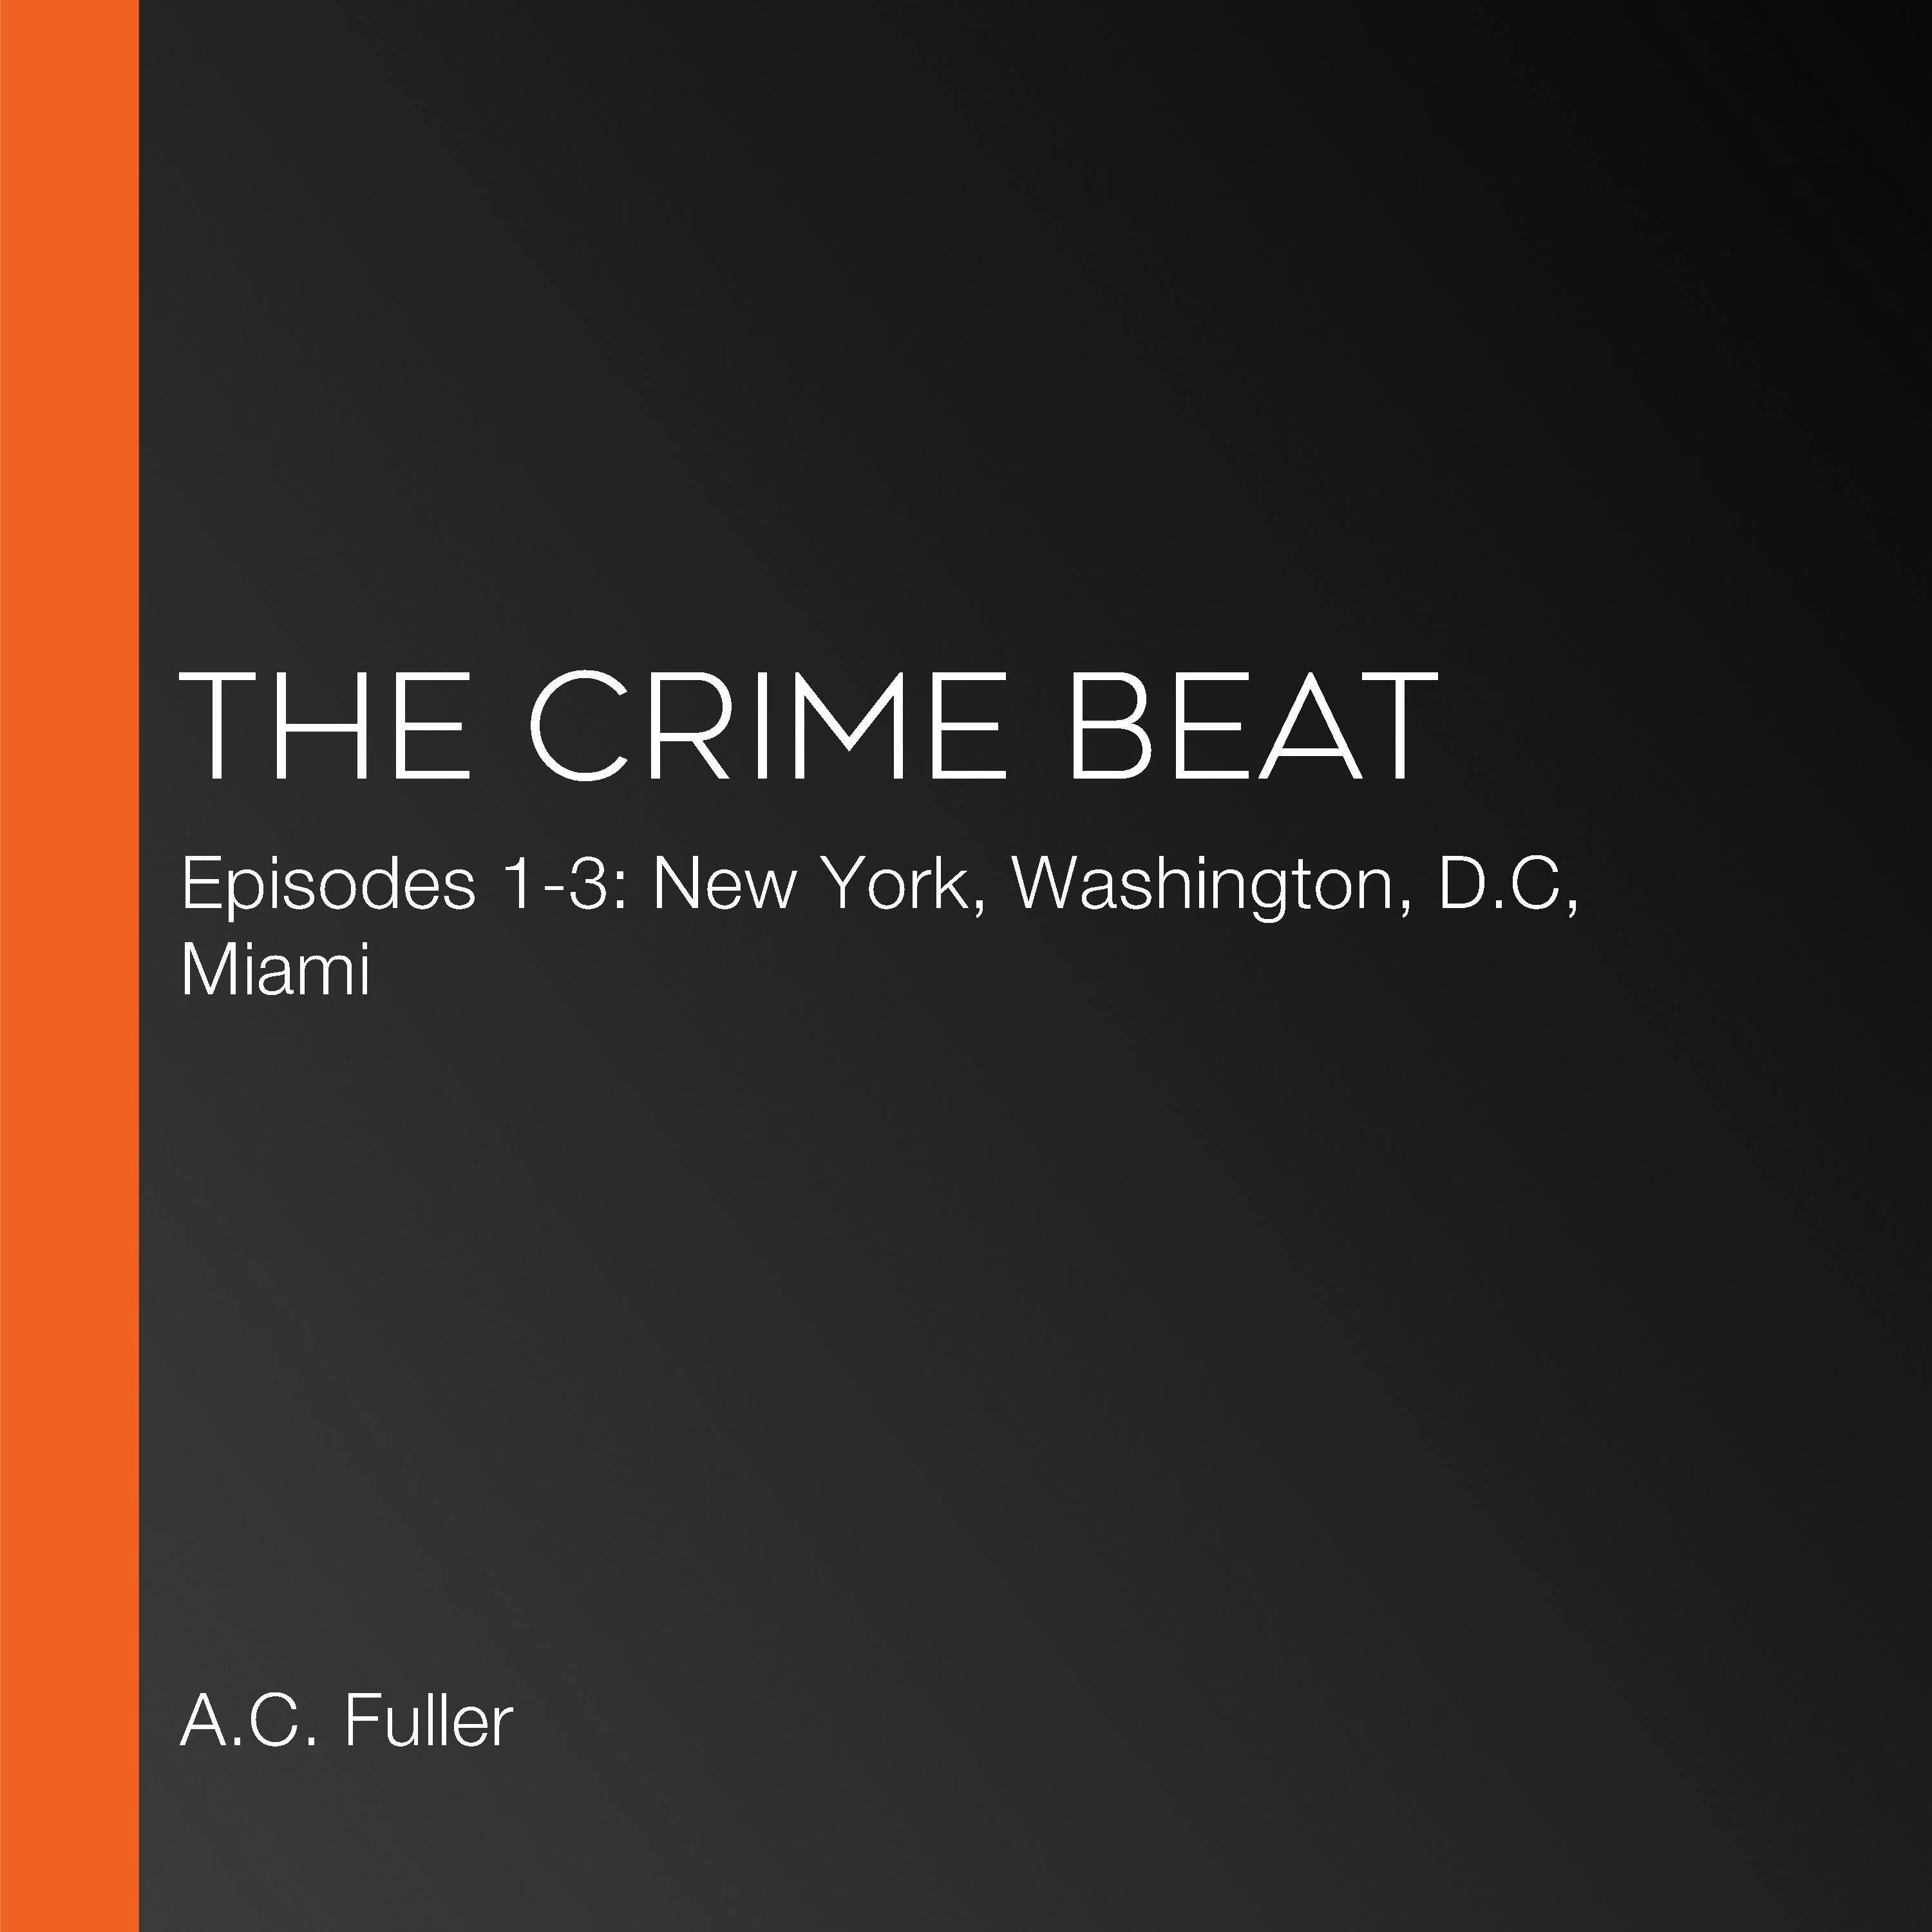 The Crime Beat: Episodes 1-3: New York, Washington, D.C, Miami - A.C. Fuller